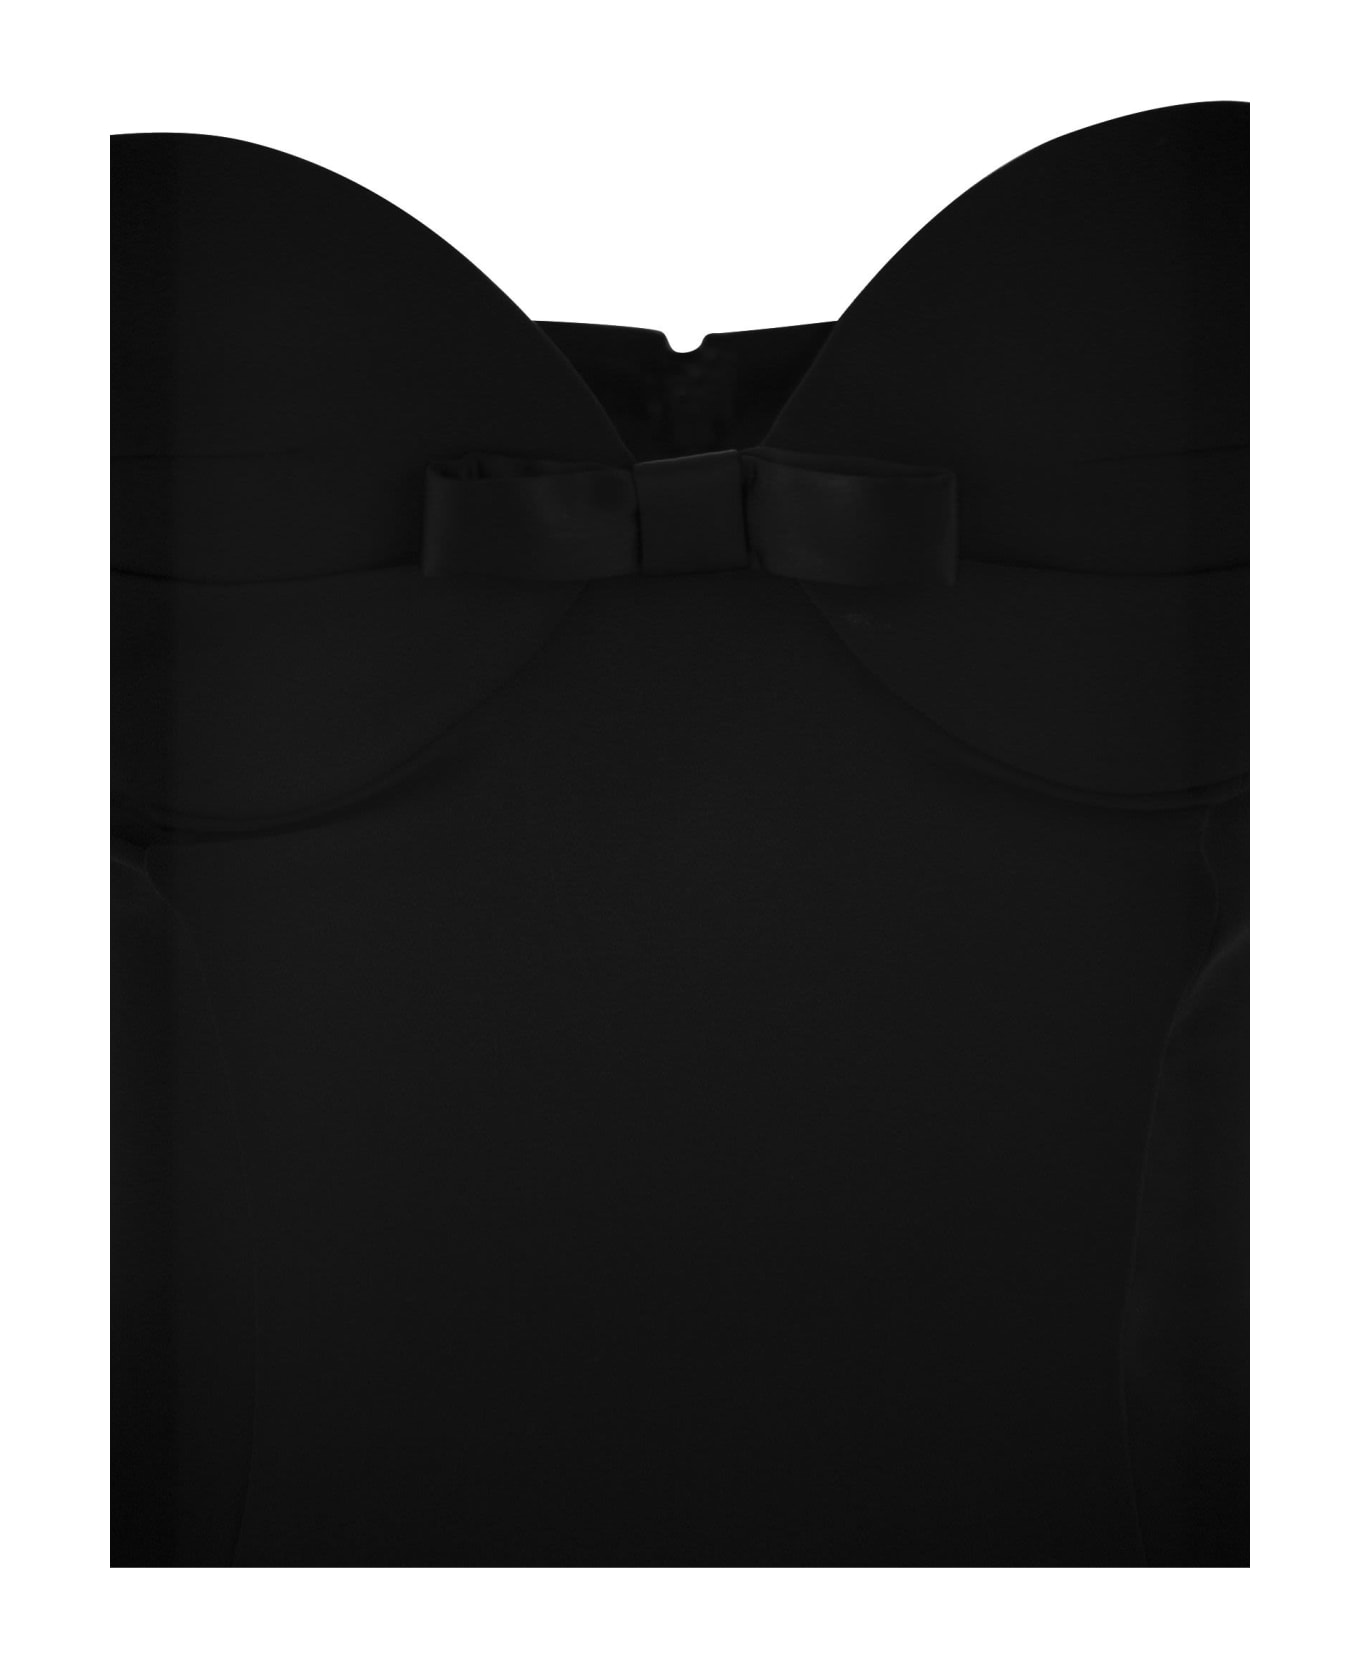 Elisabetta Franchi Midi Bow Dress - Black